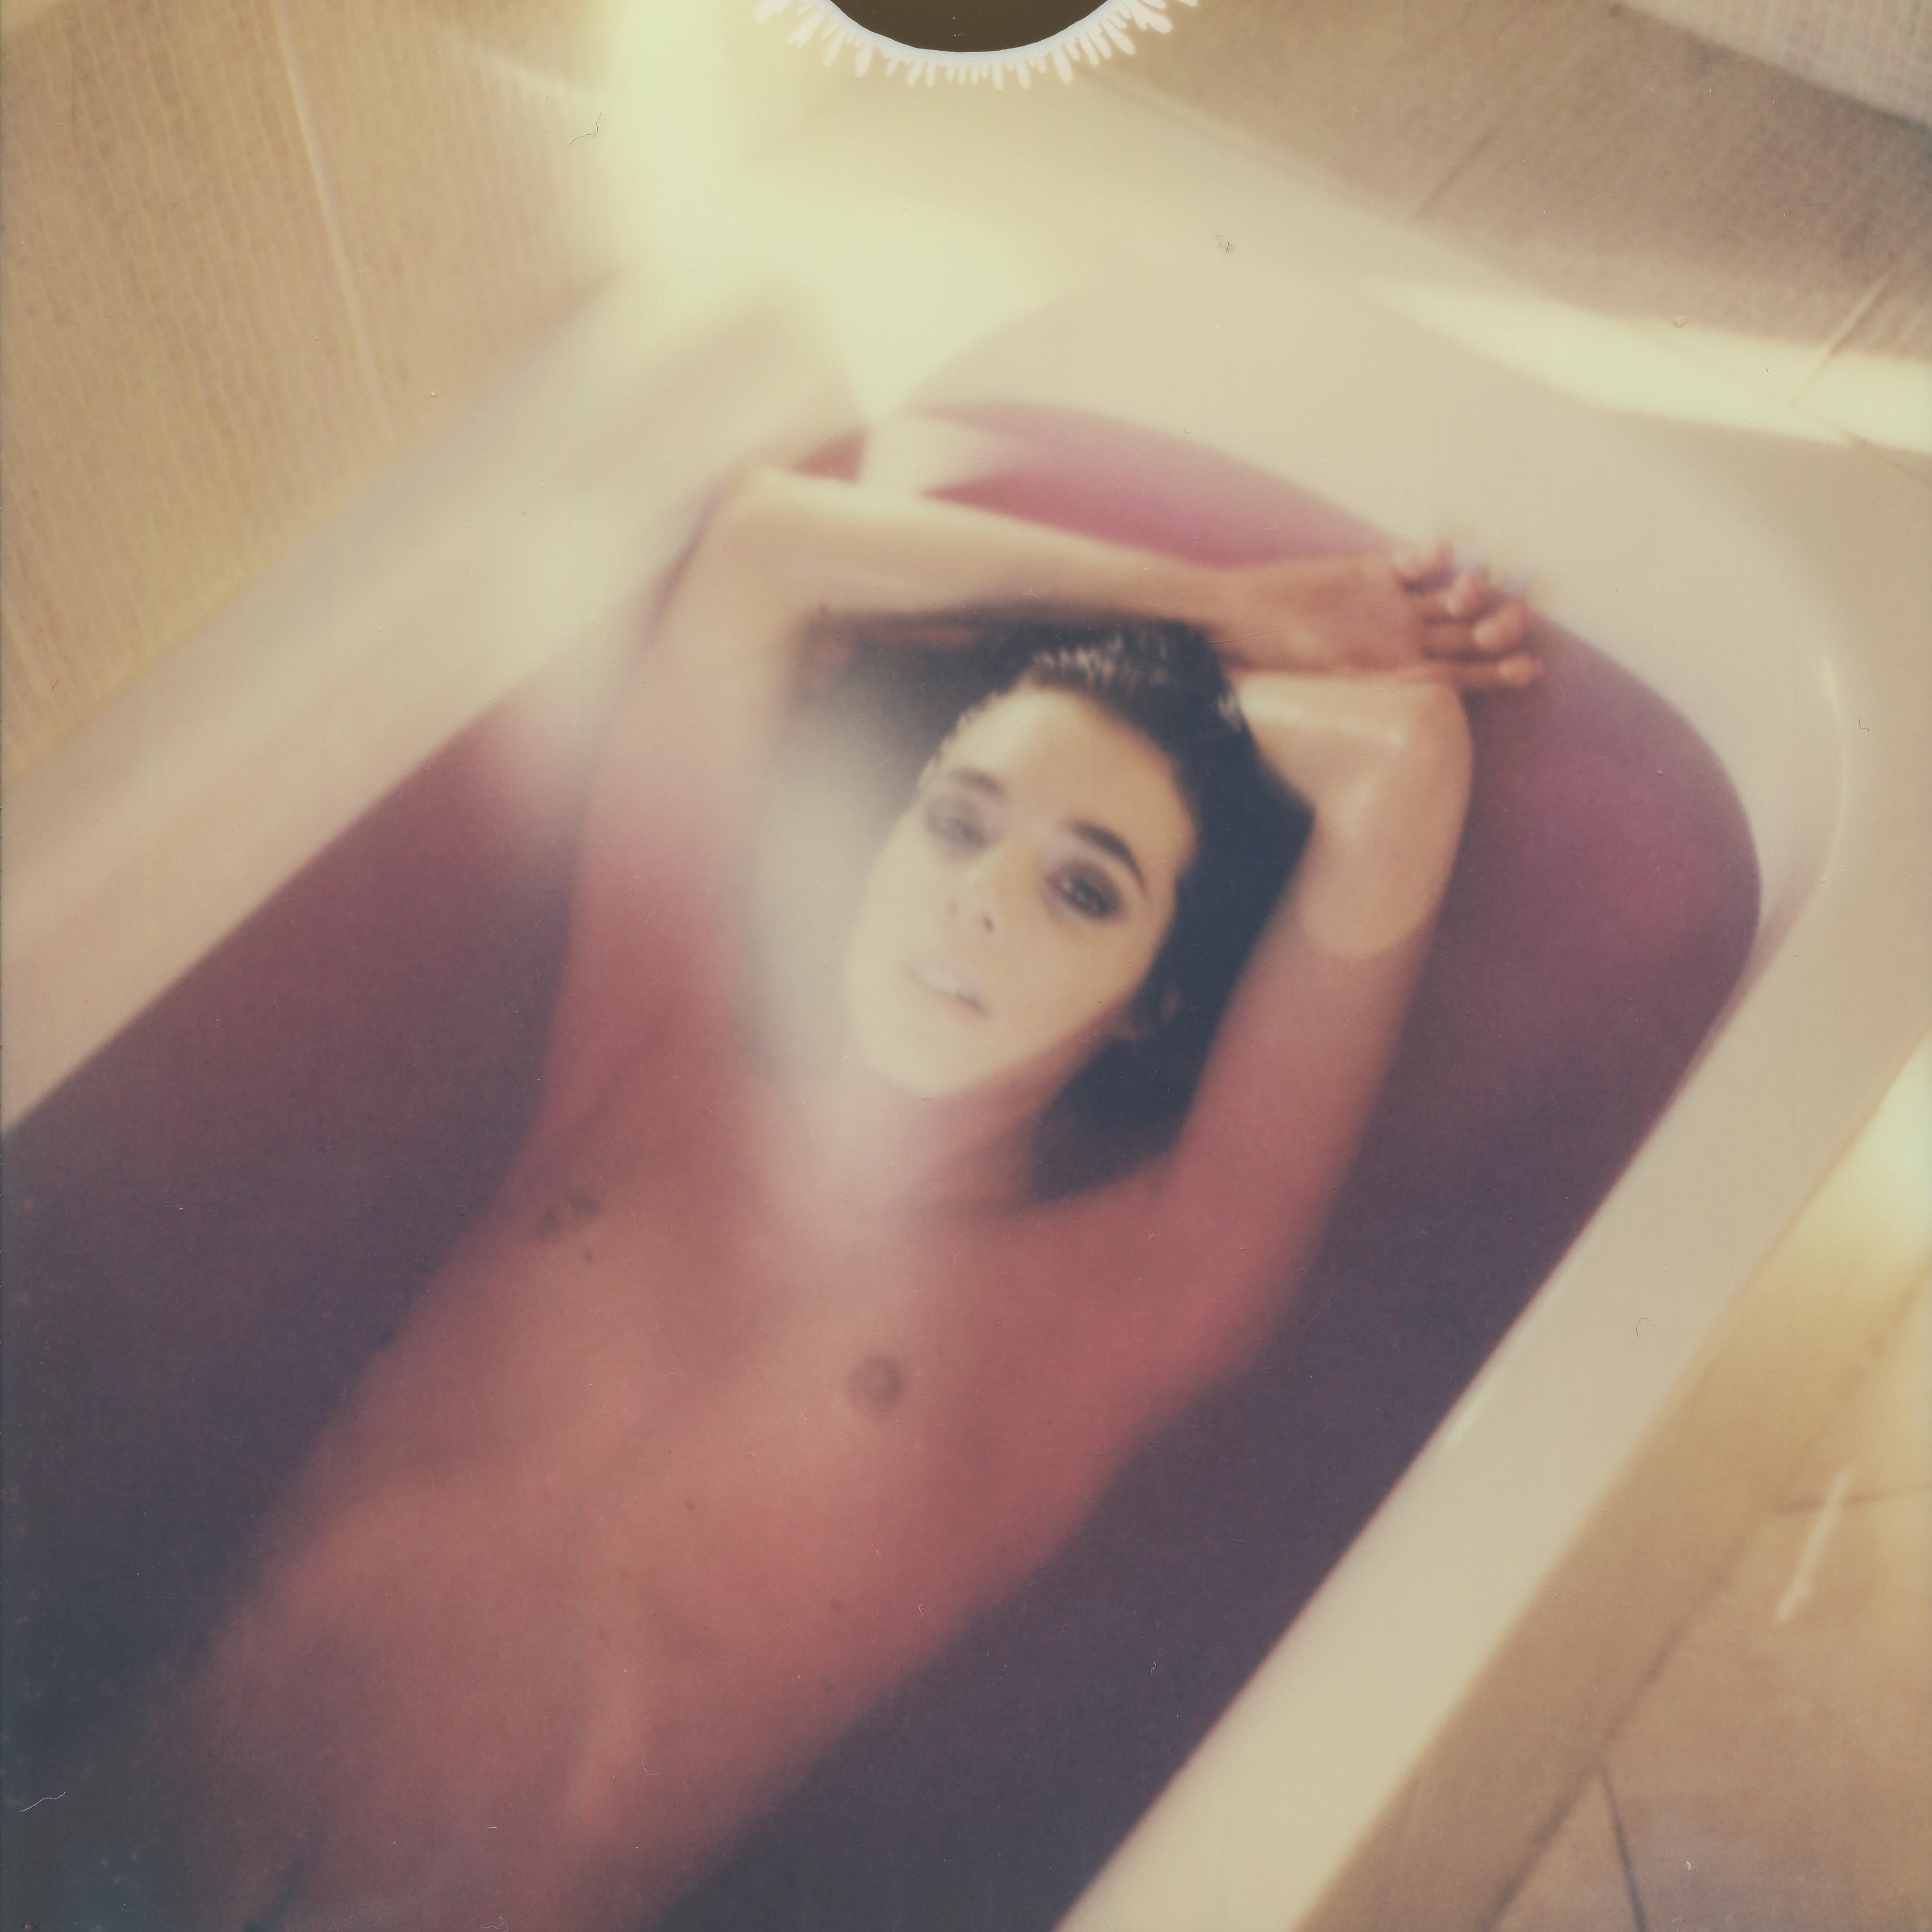 Bath time story V - Contemporary, Nude, Women, Polaroid, 21st Century